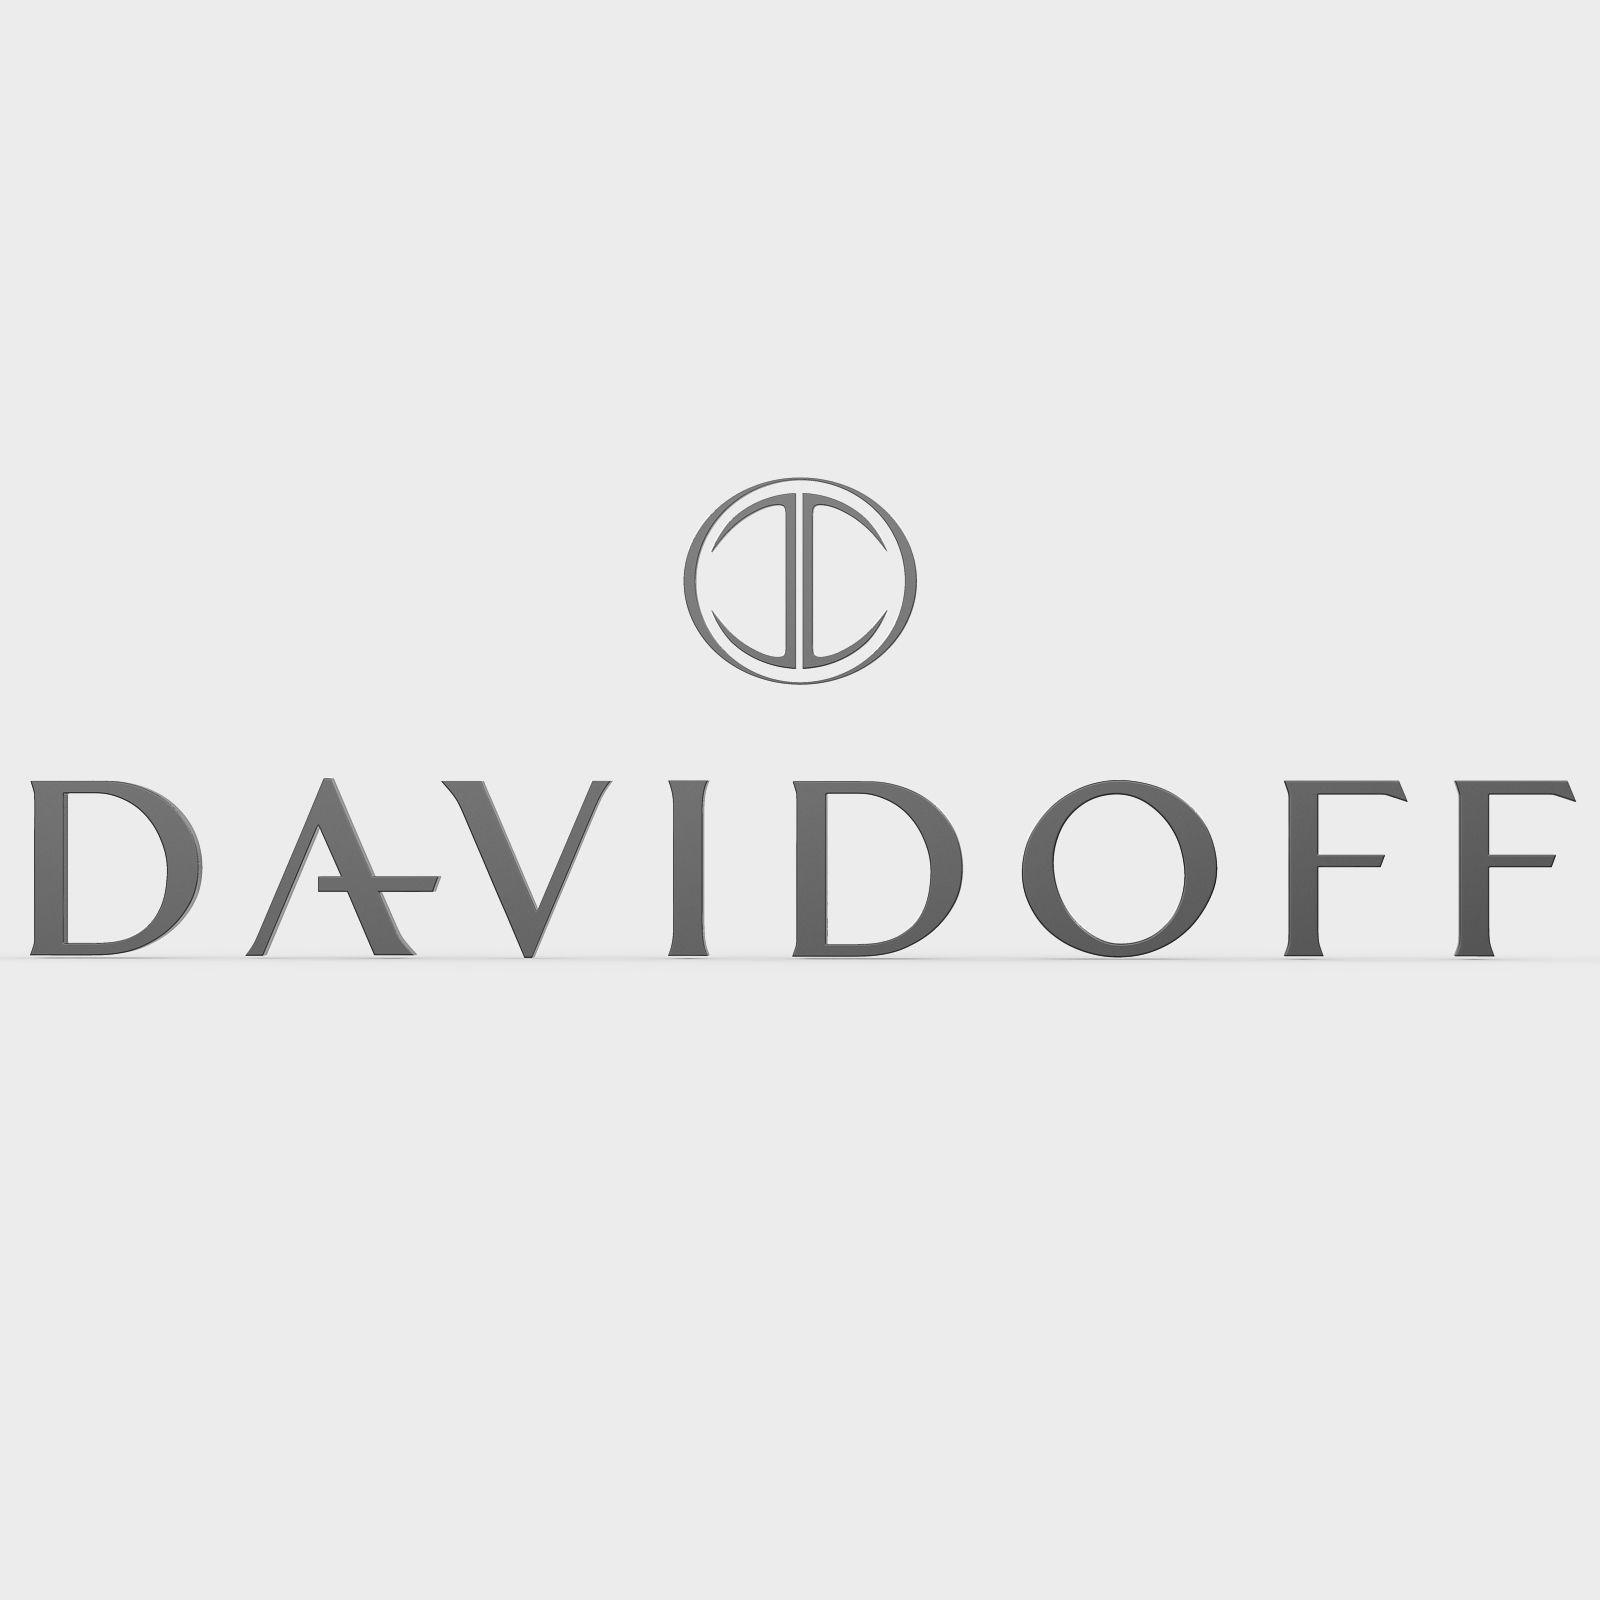 Davidoff Logo - davidoff logo 3D model | CGTrader